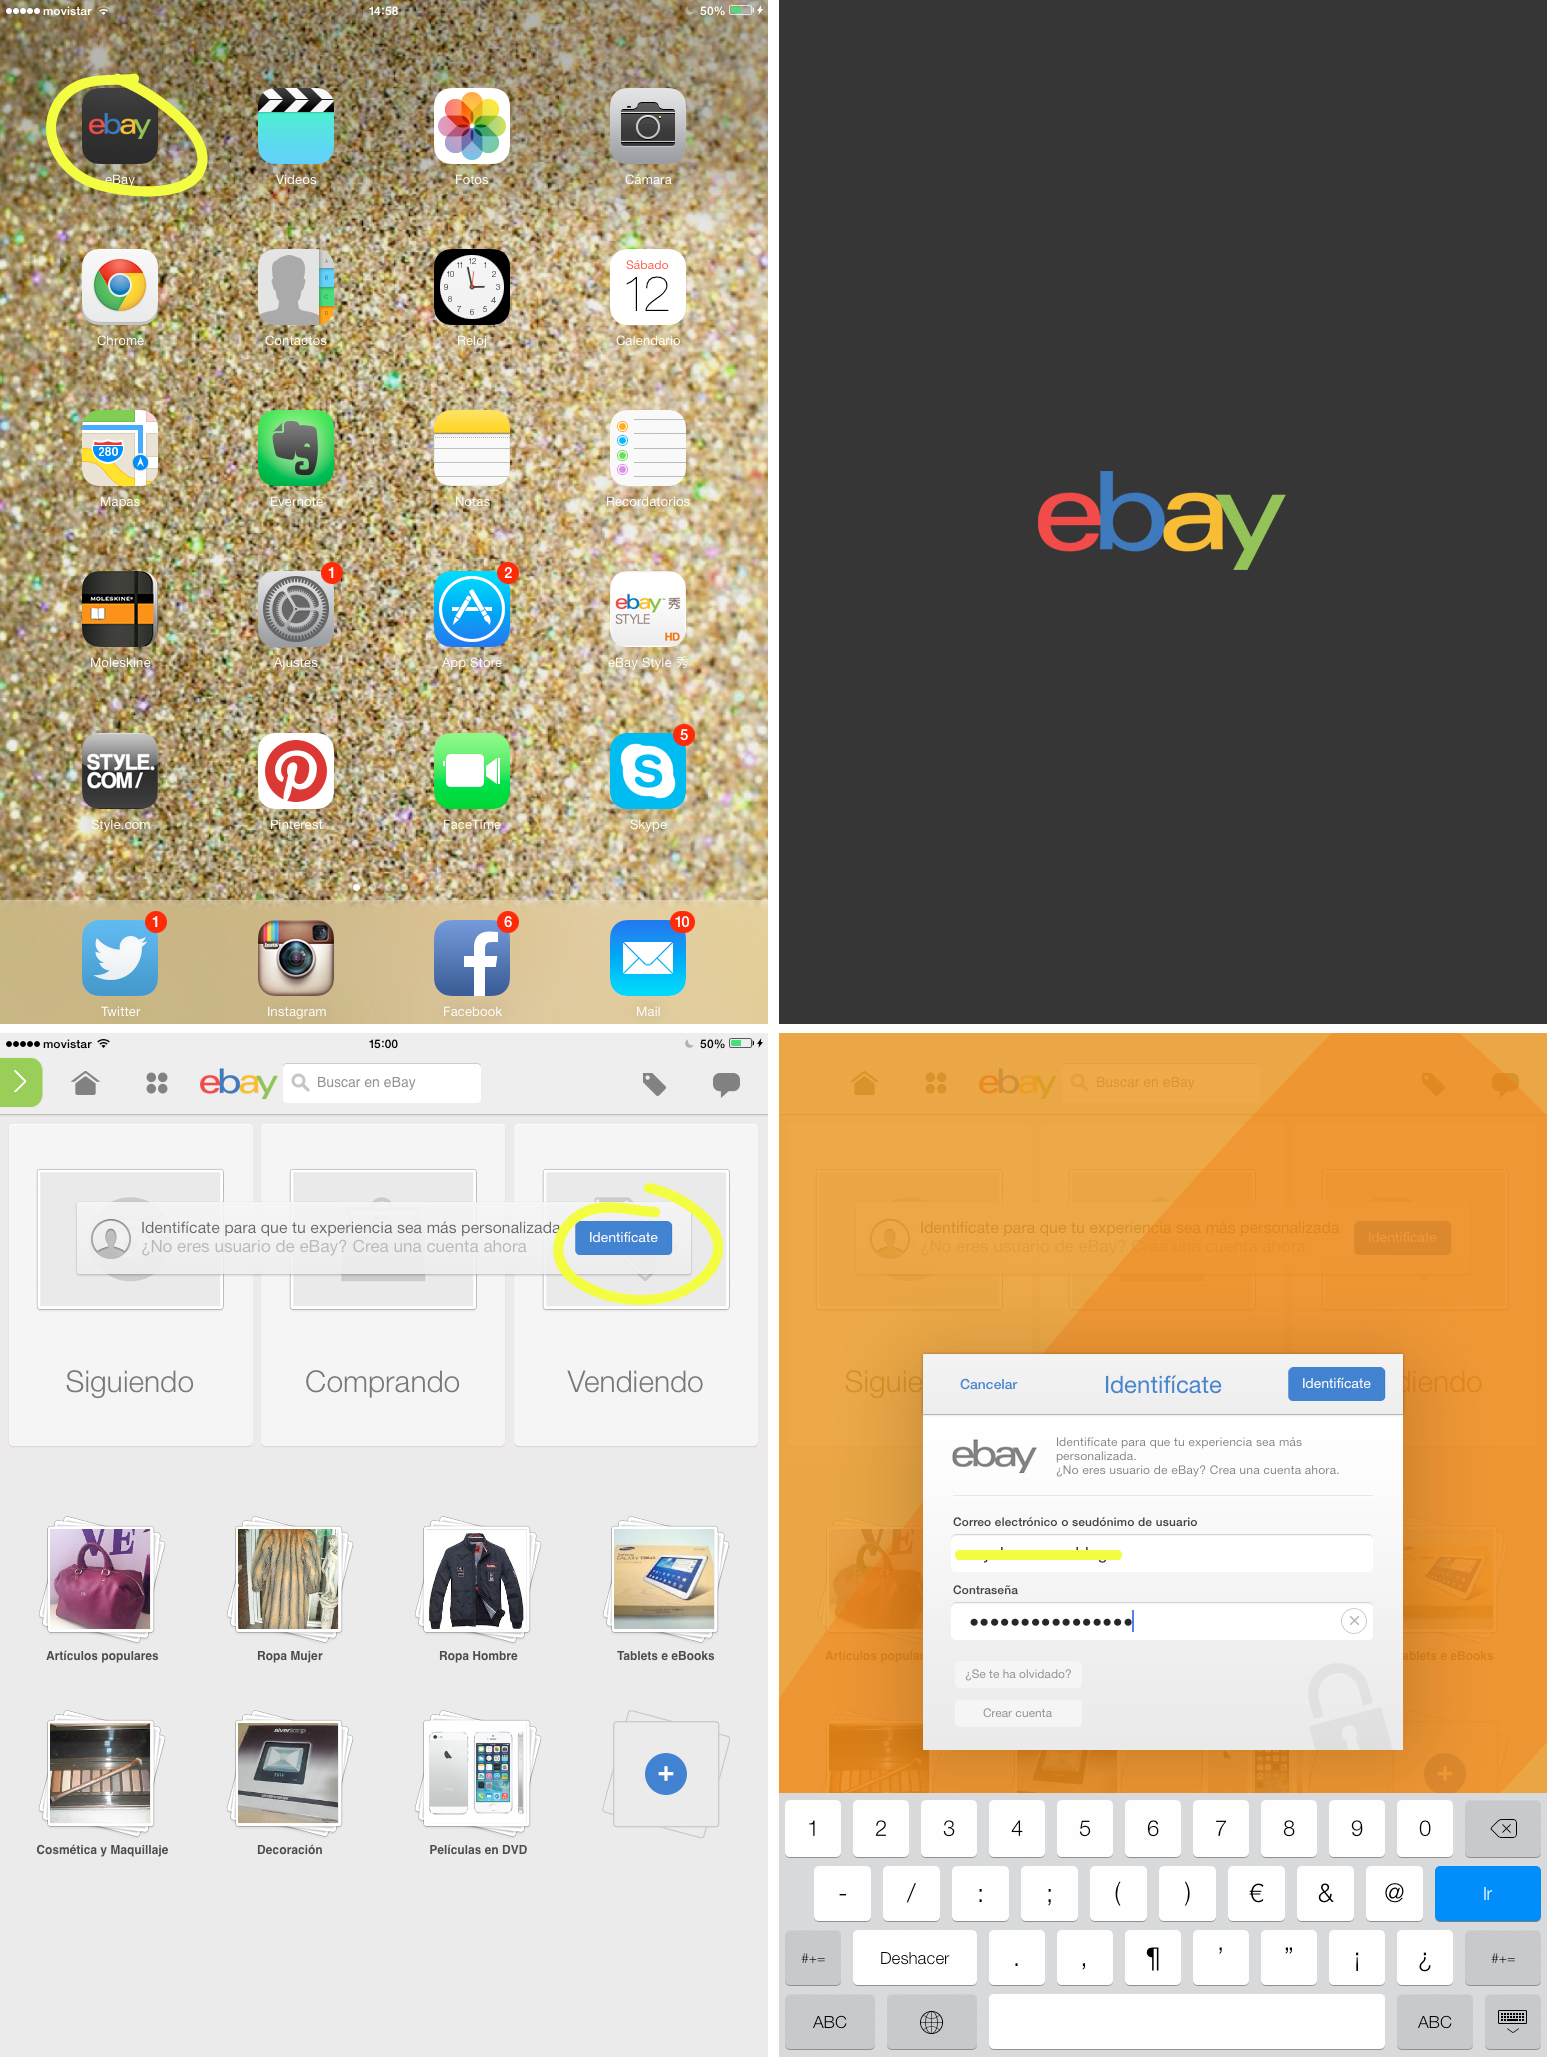 ebay spain, my showroom, ipad app, 